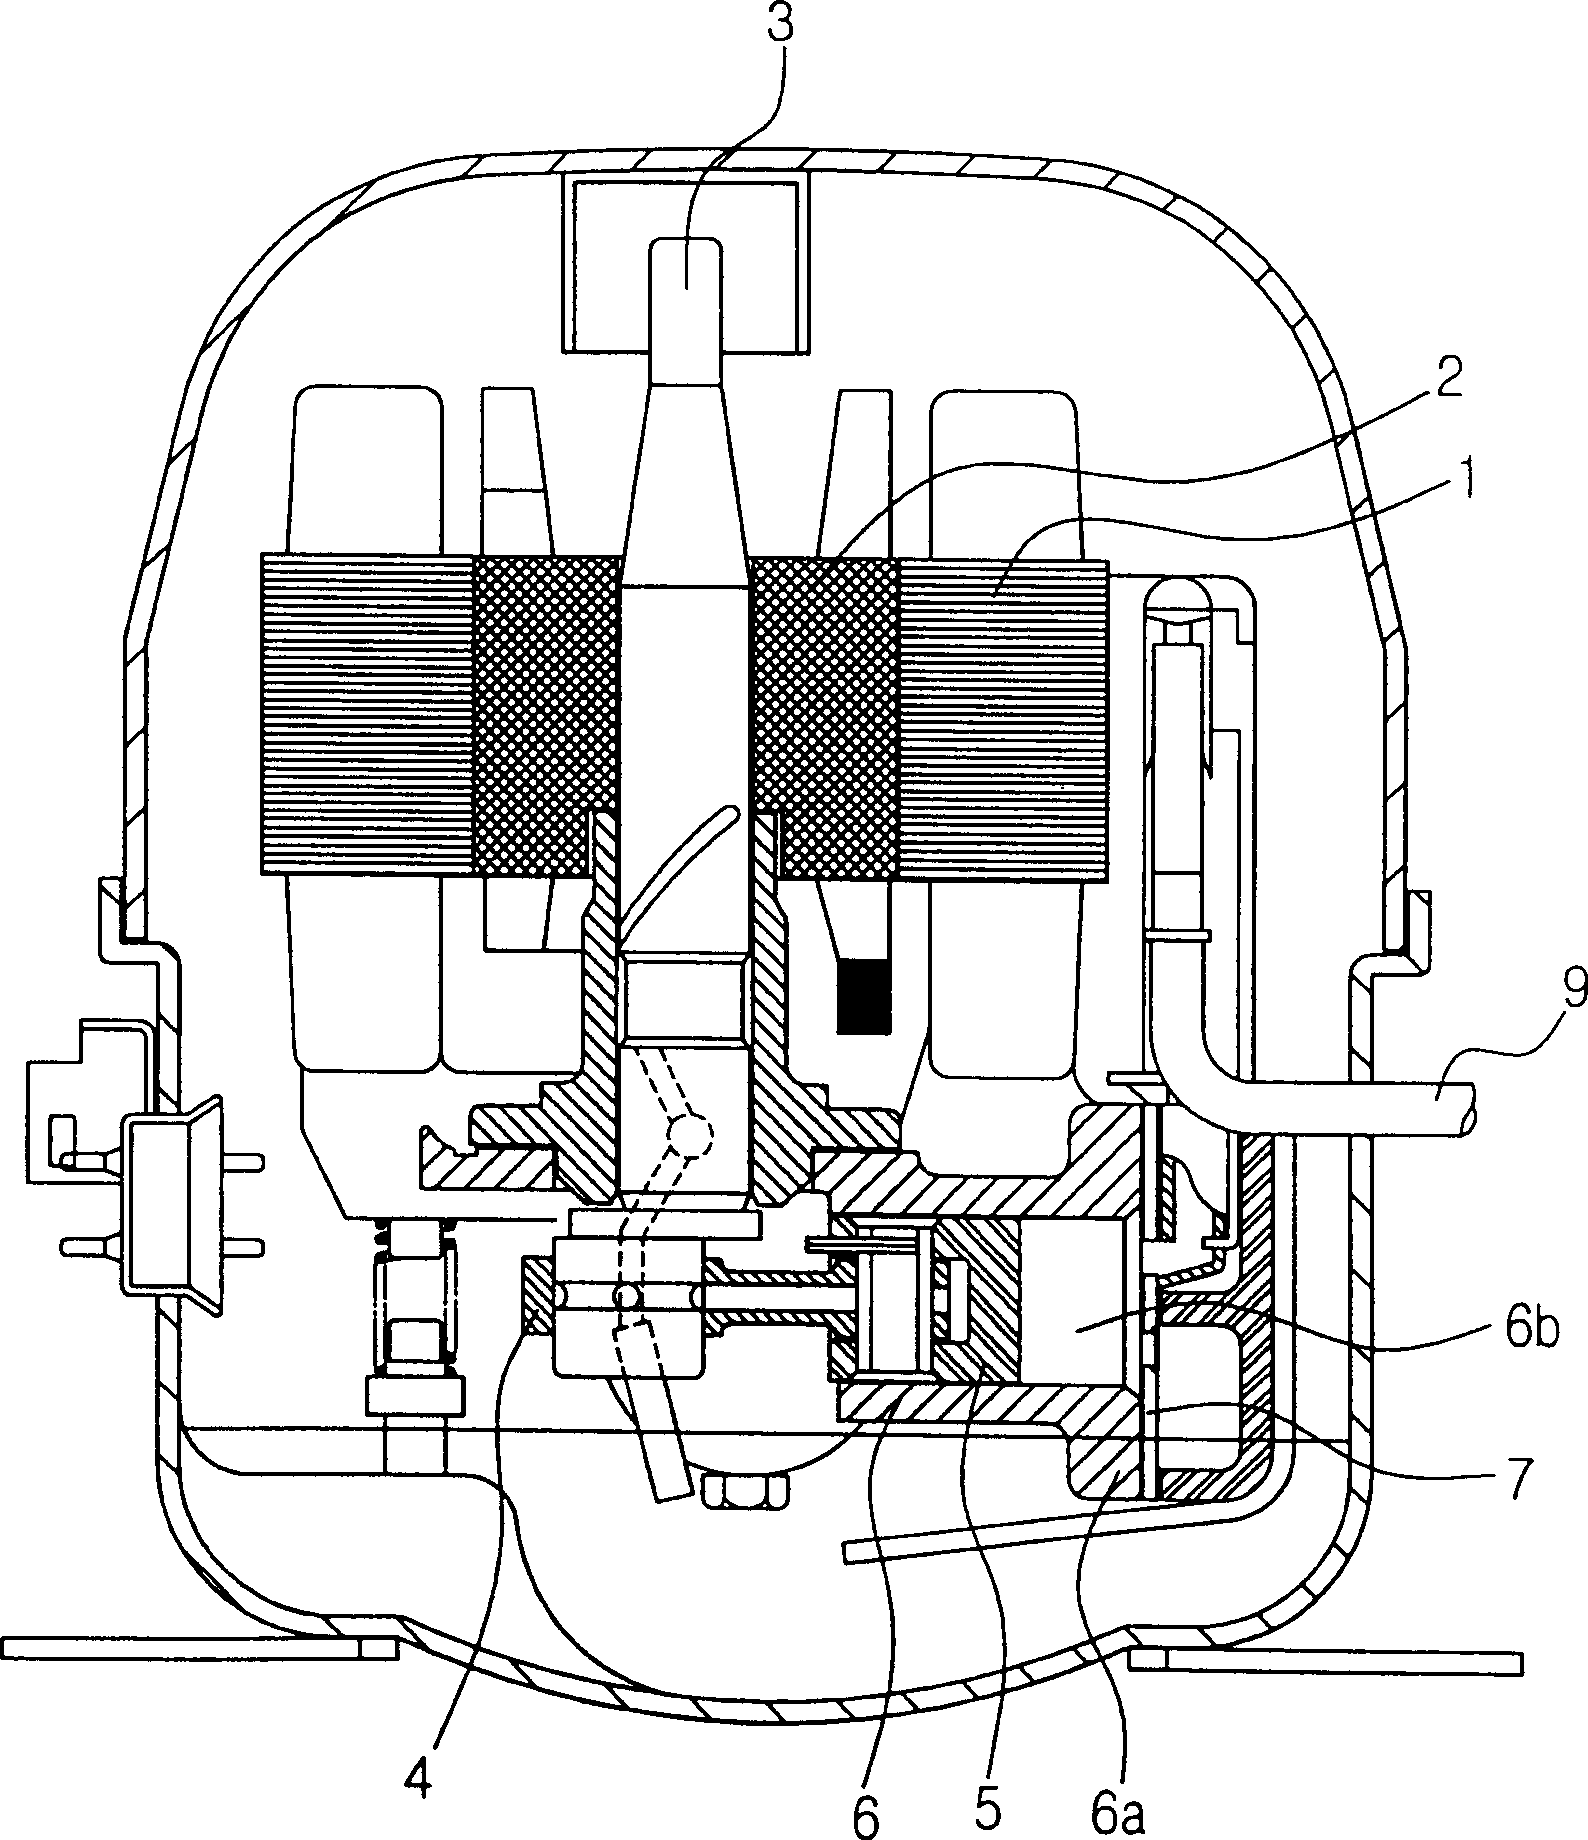 Exhaust valve of sealed compressor